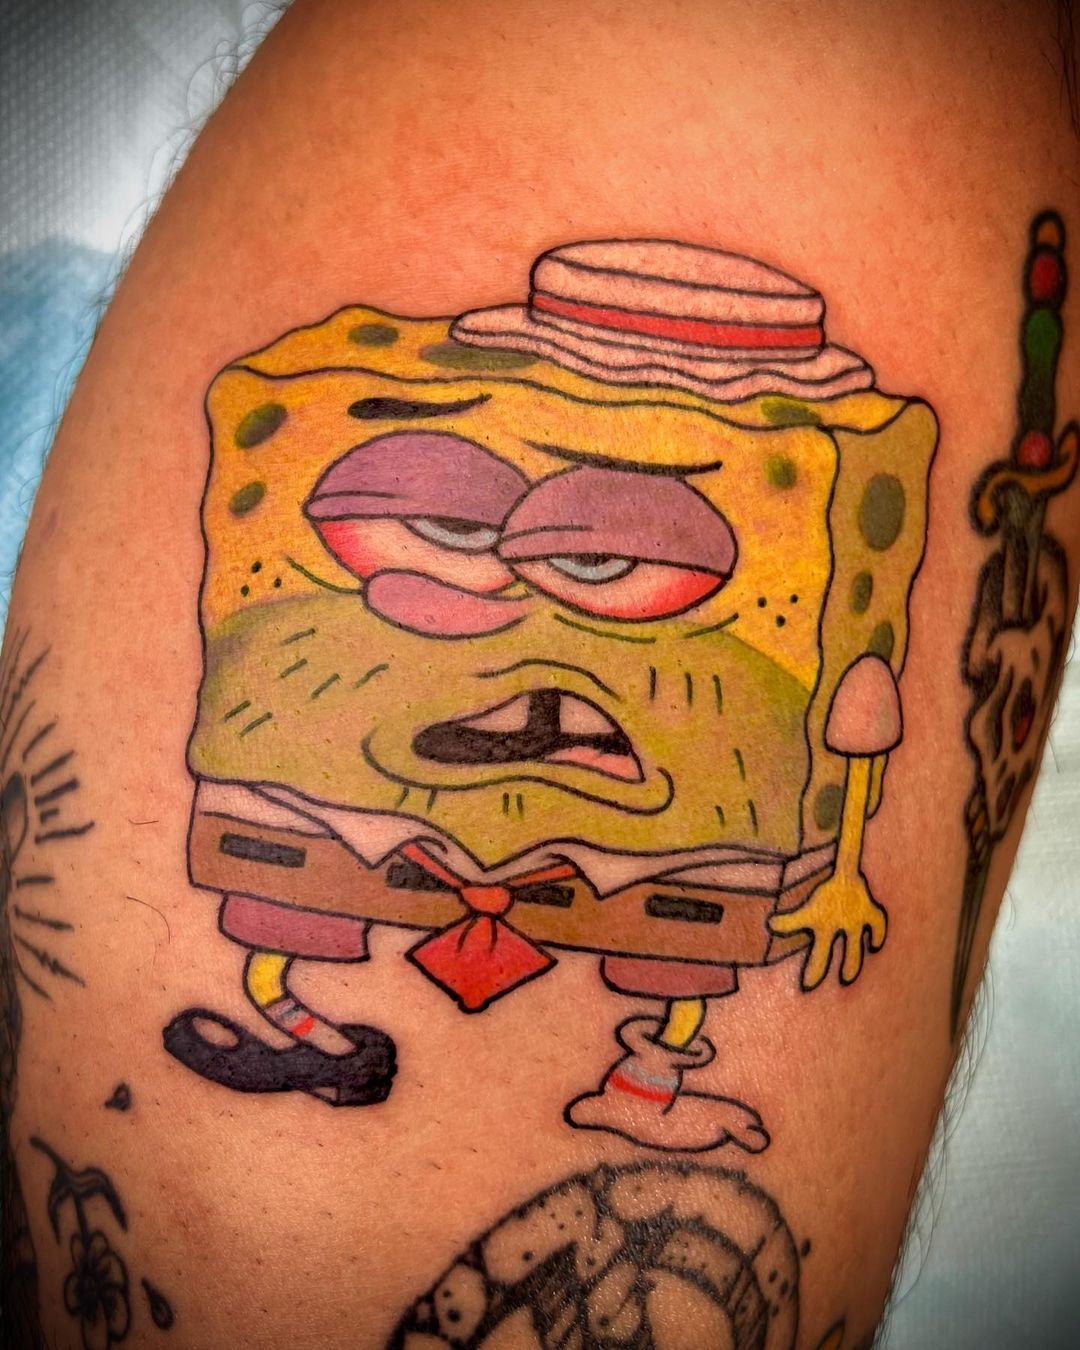 Amazoncom  SpongeBob SquarePants Fun temporary Tattoos in Folders Set of  15  Beauty  Personal Care